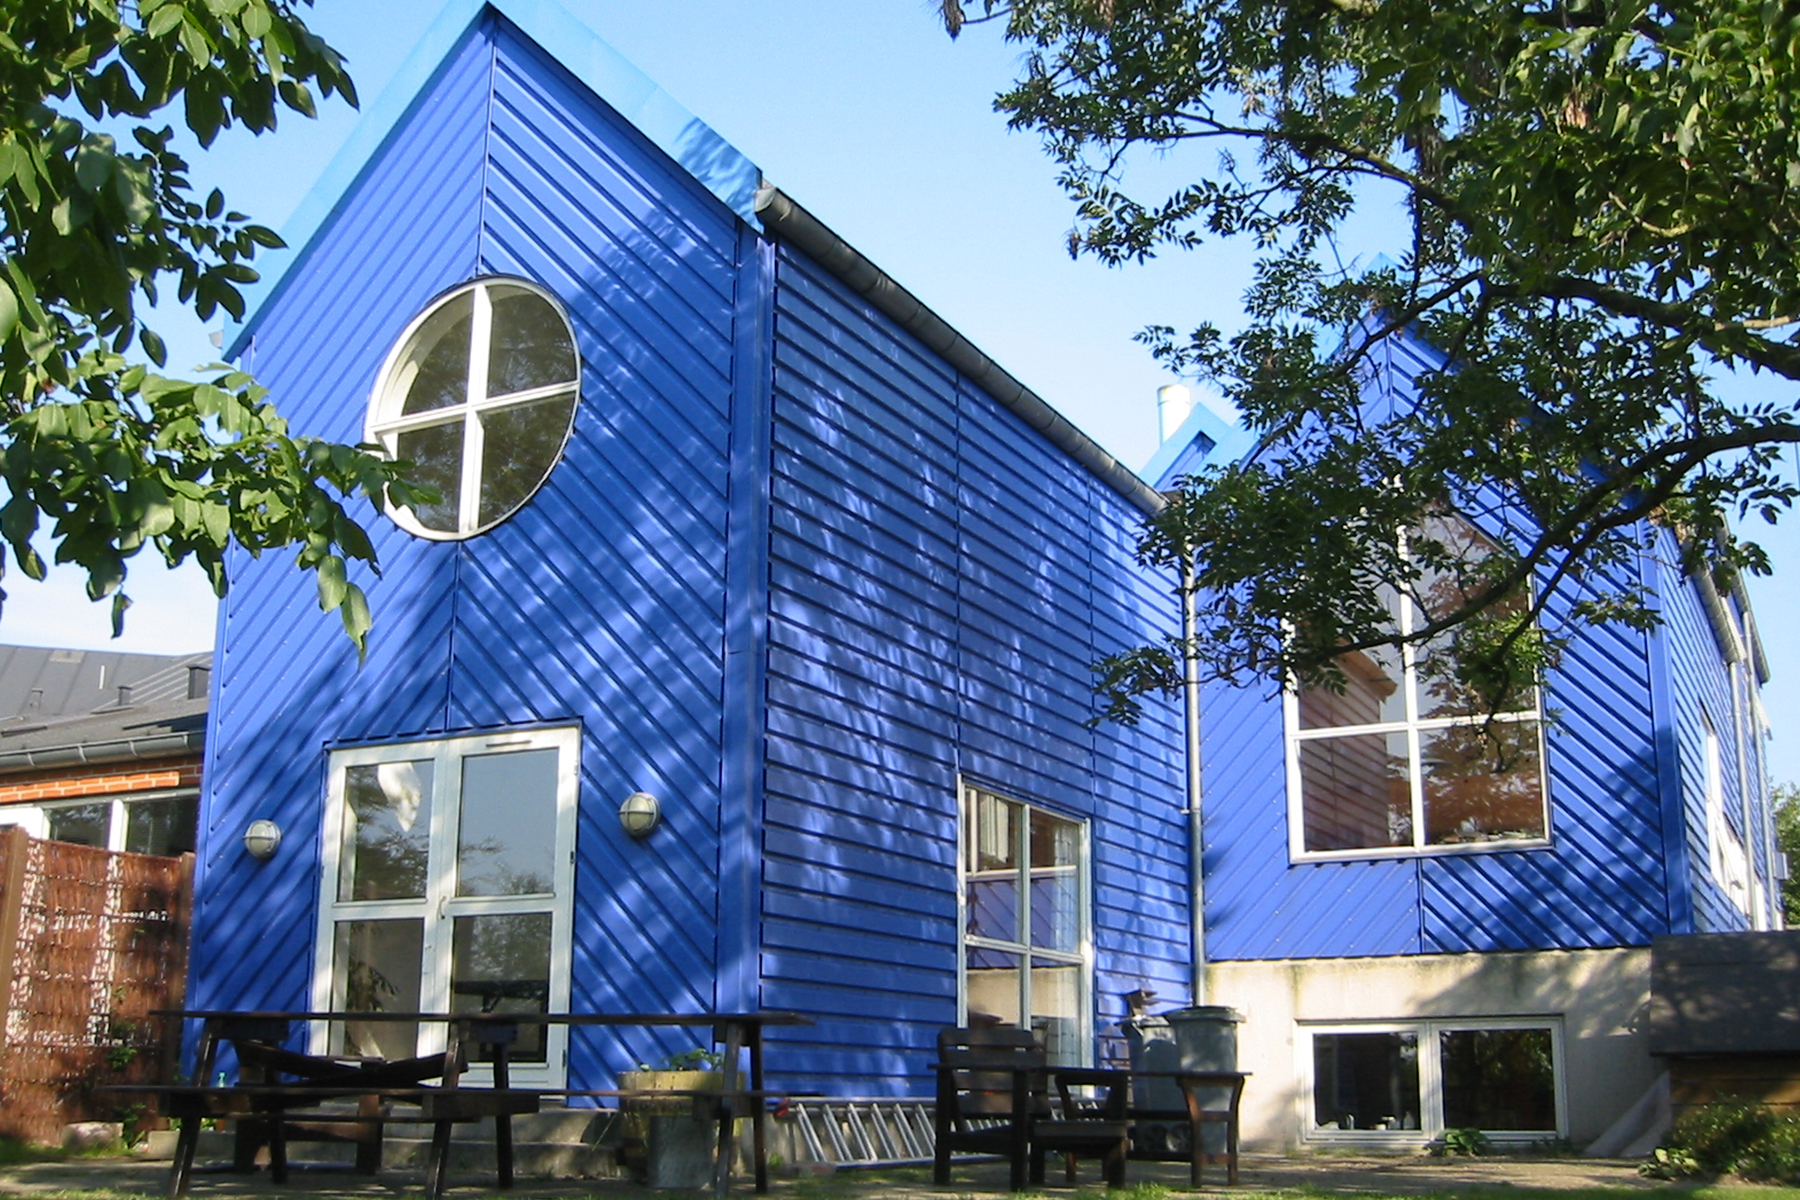   Kilen Cohousing  in Bikerod, DK. Designed by Jan Gudmand Hoyer 